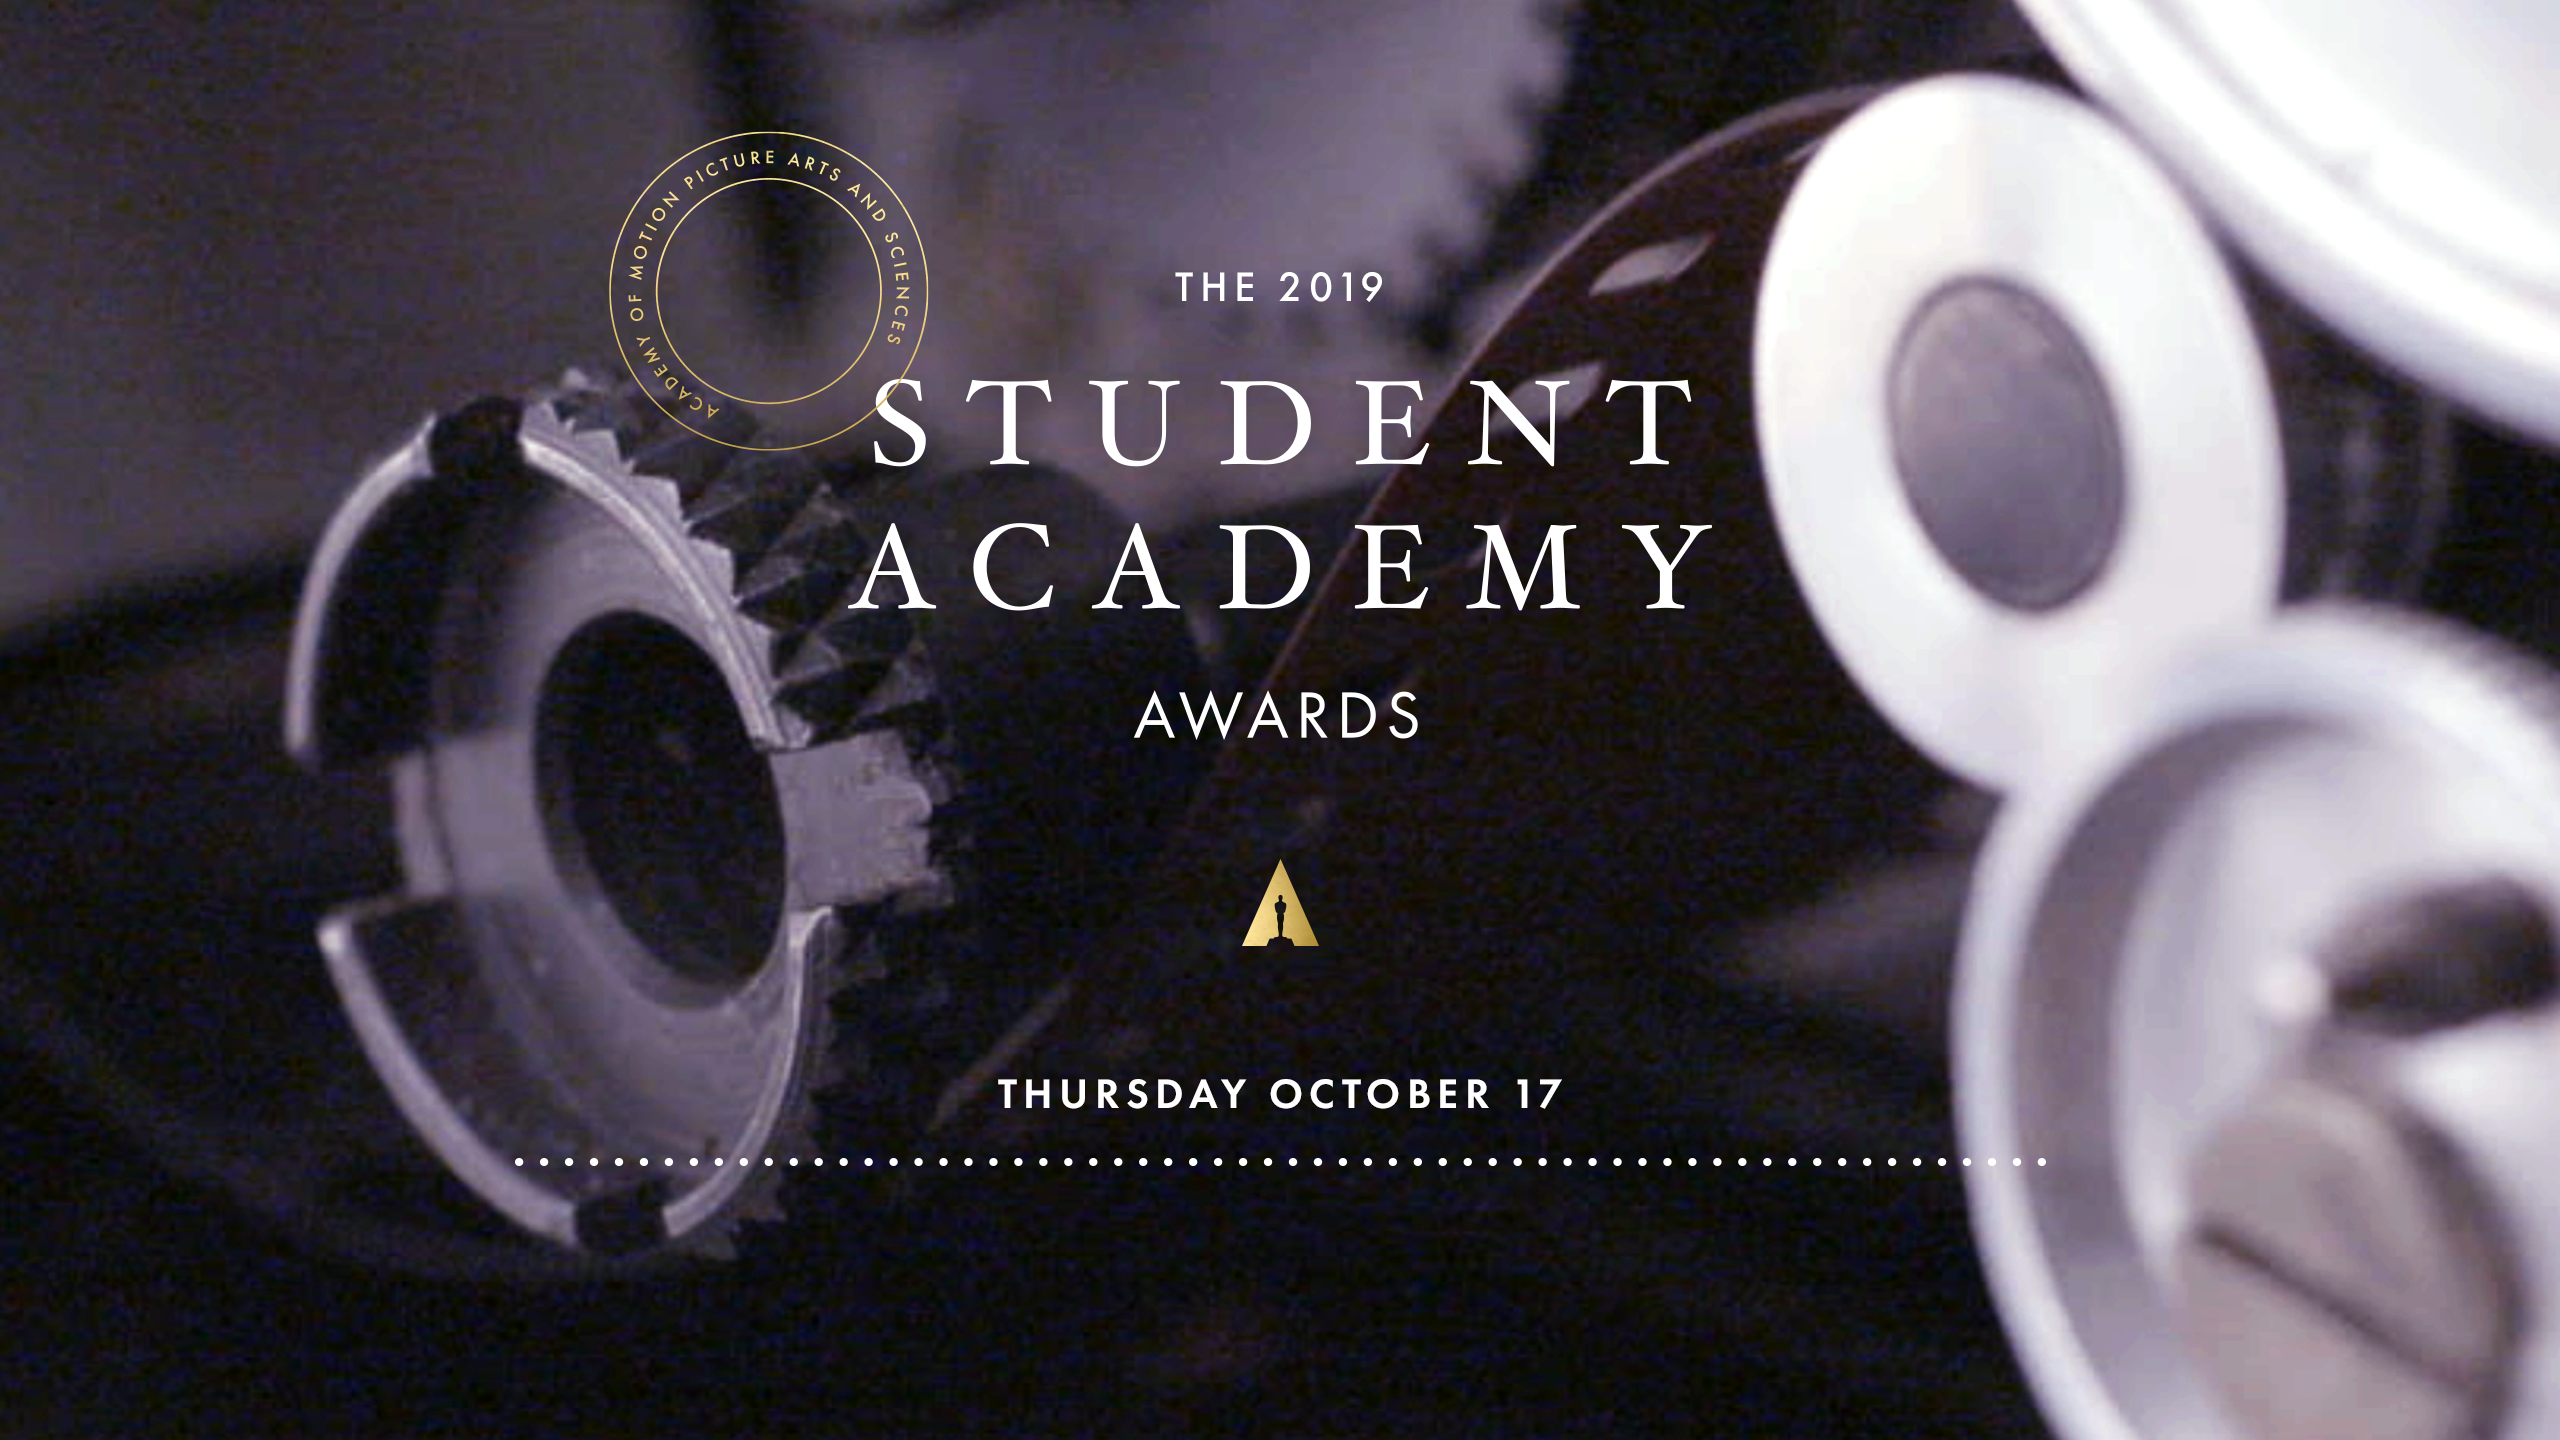 Meet the 2019 Student Academy Awards Finalists